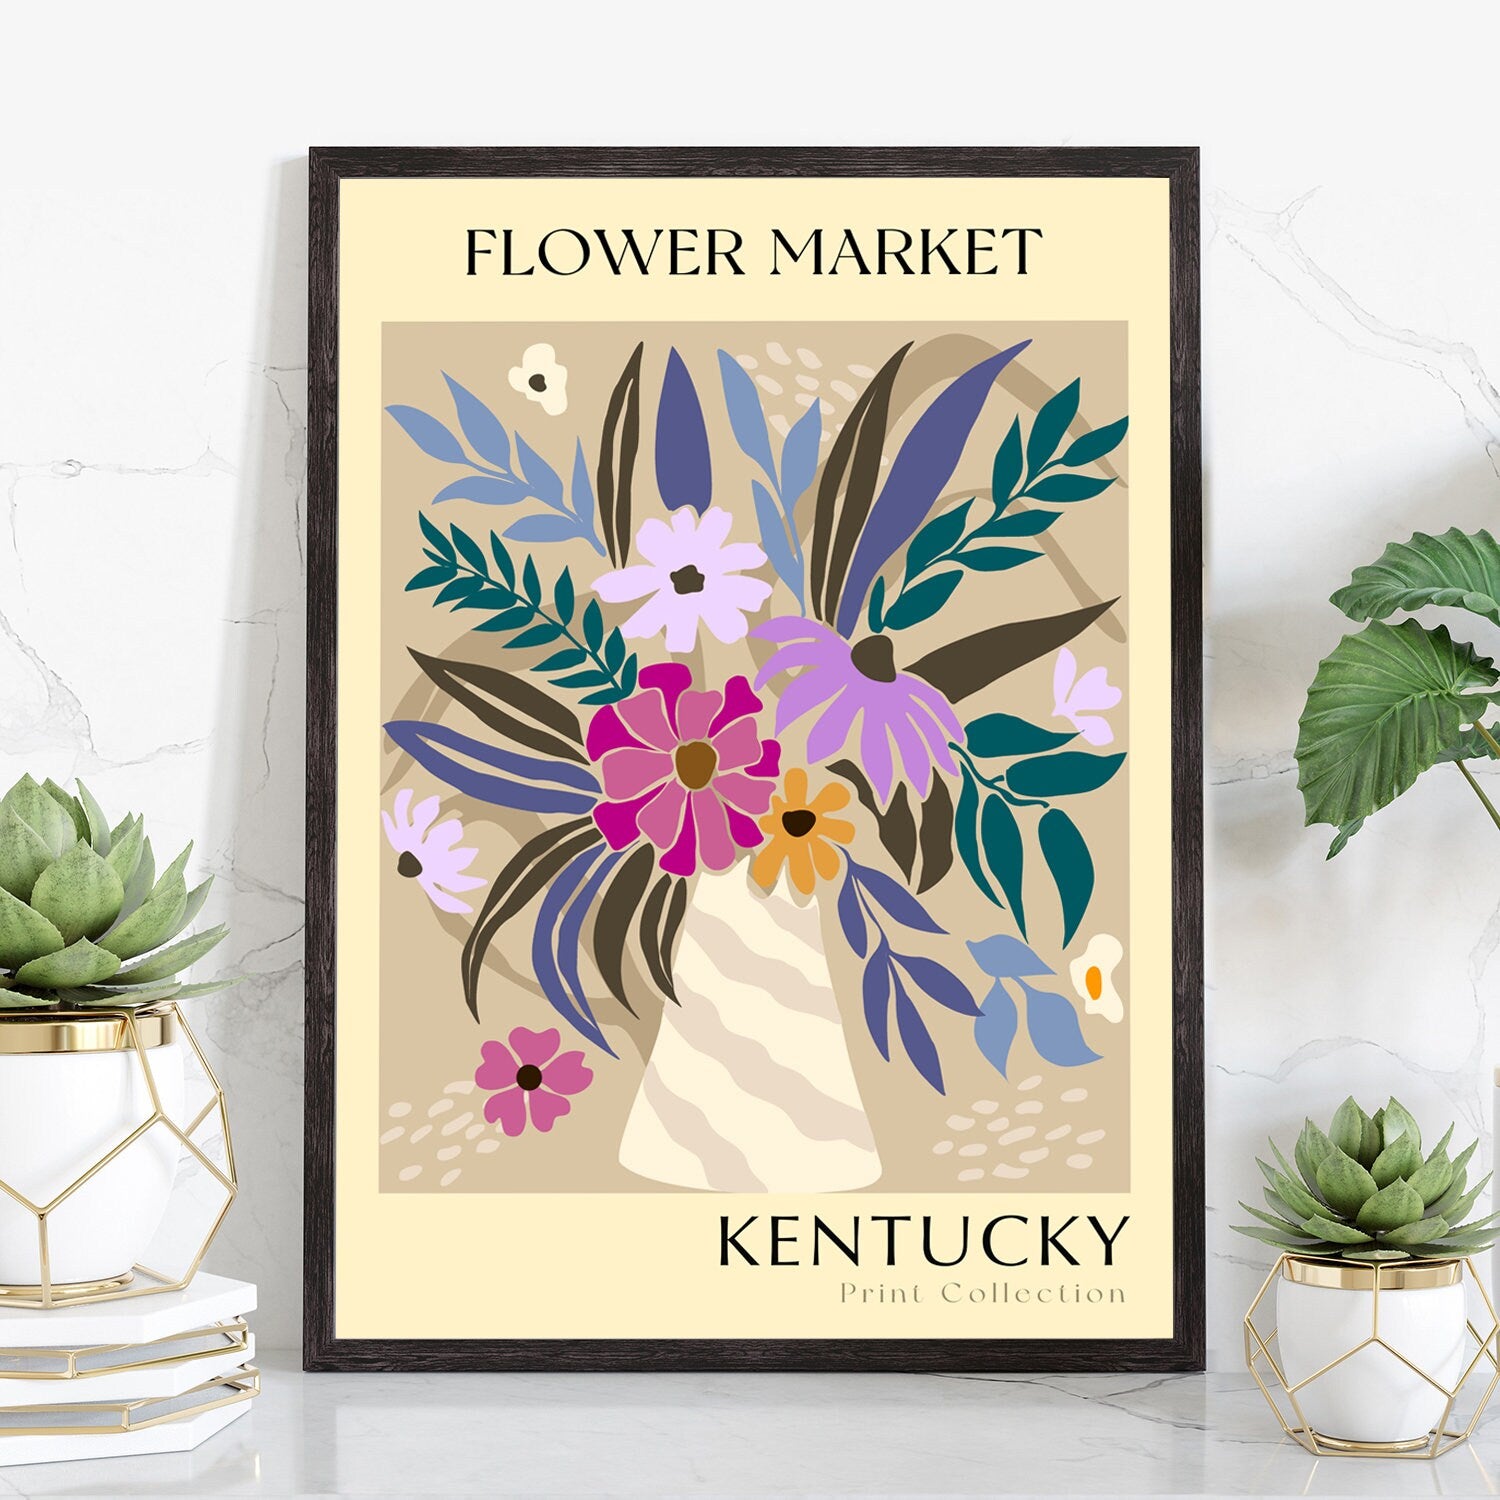 Kentucky State flower print, USA states poster, Kentucky flower market poster, Botanical poster, Nature poster artwork, Boho floral wall art